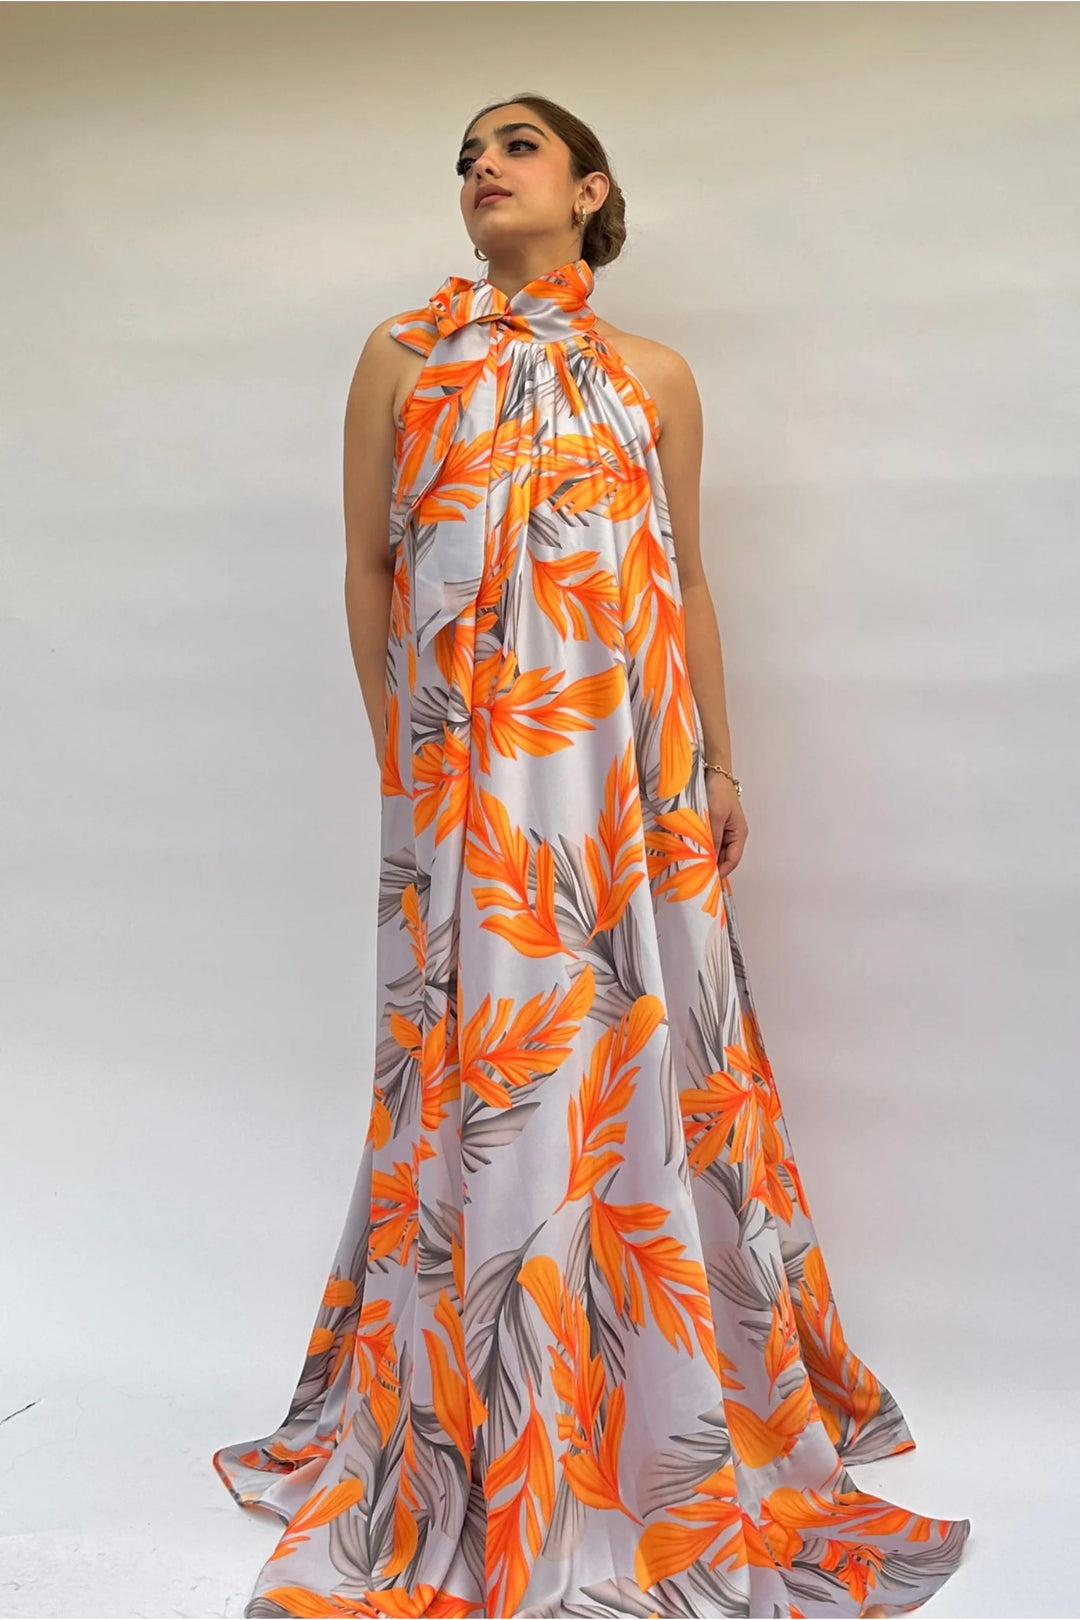 Vibrant Floral Maxi Dress  Chiffon blouses designs, Floral dress design,  Floral chiffon dress